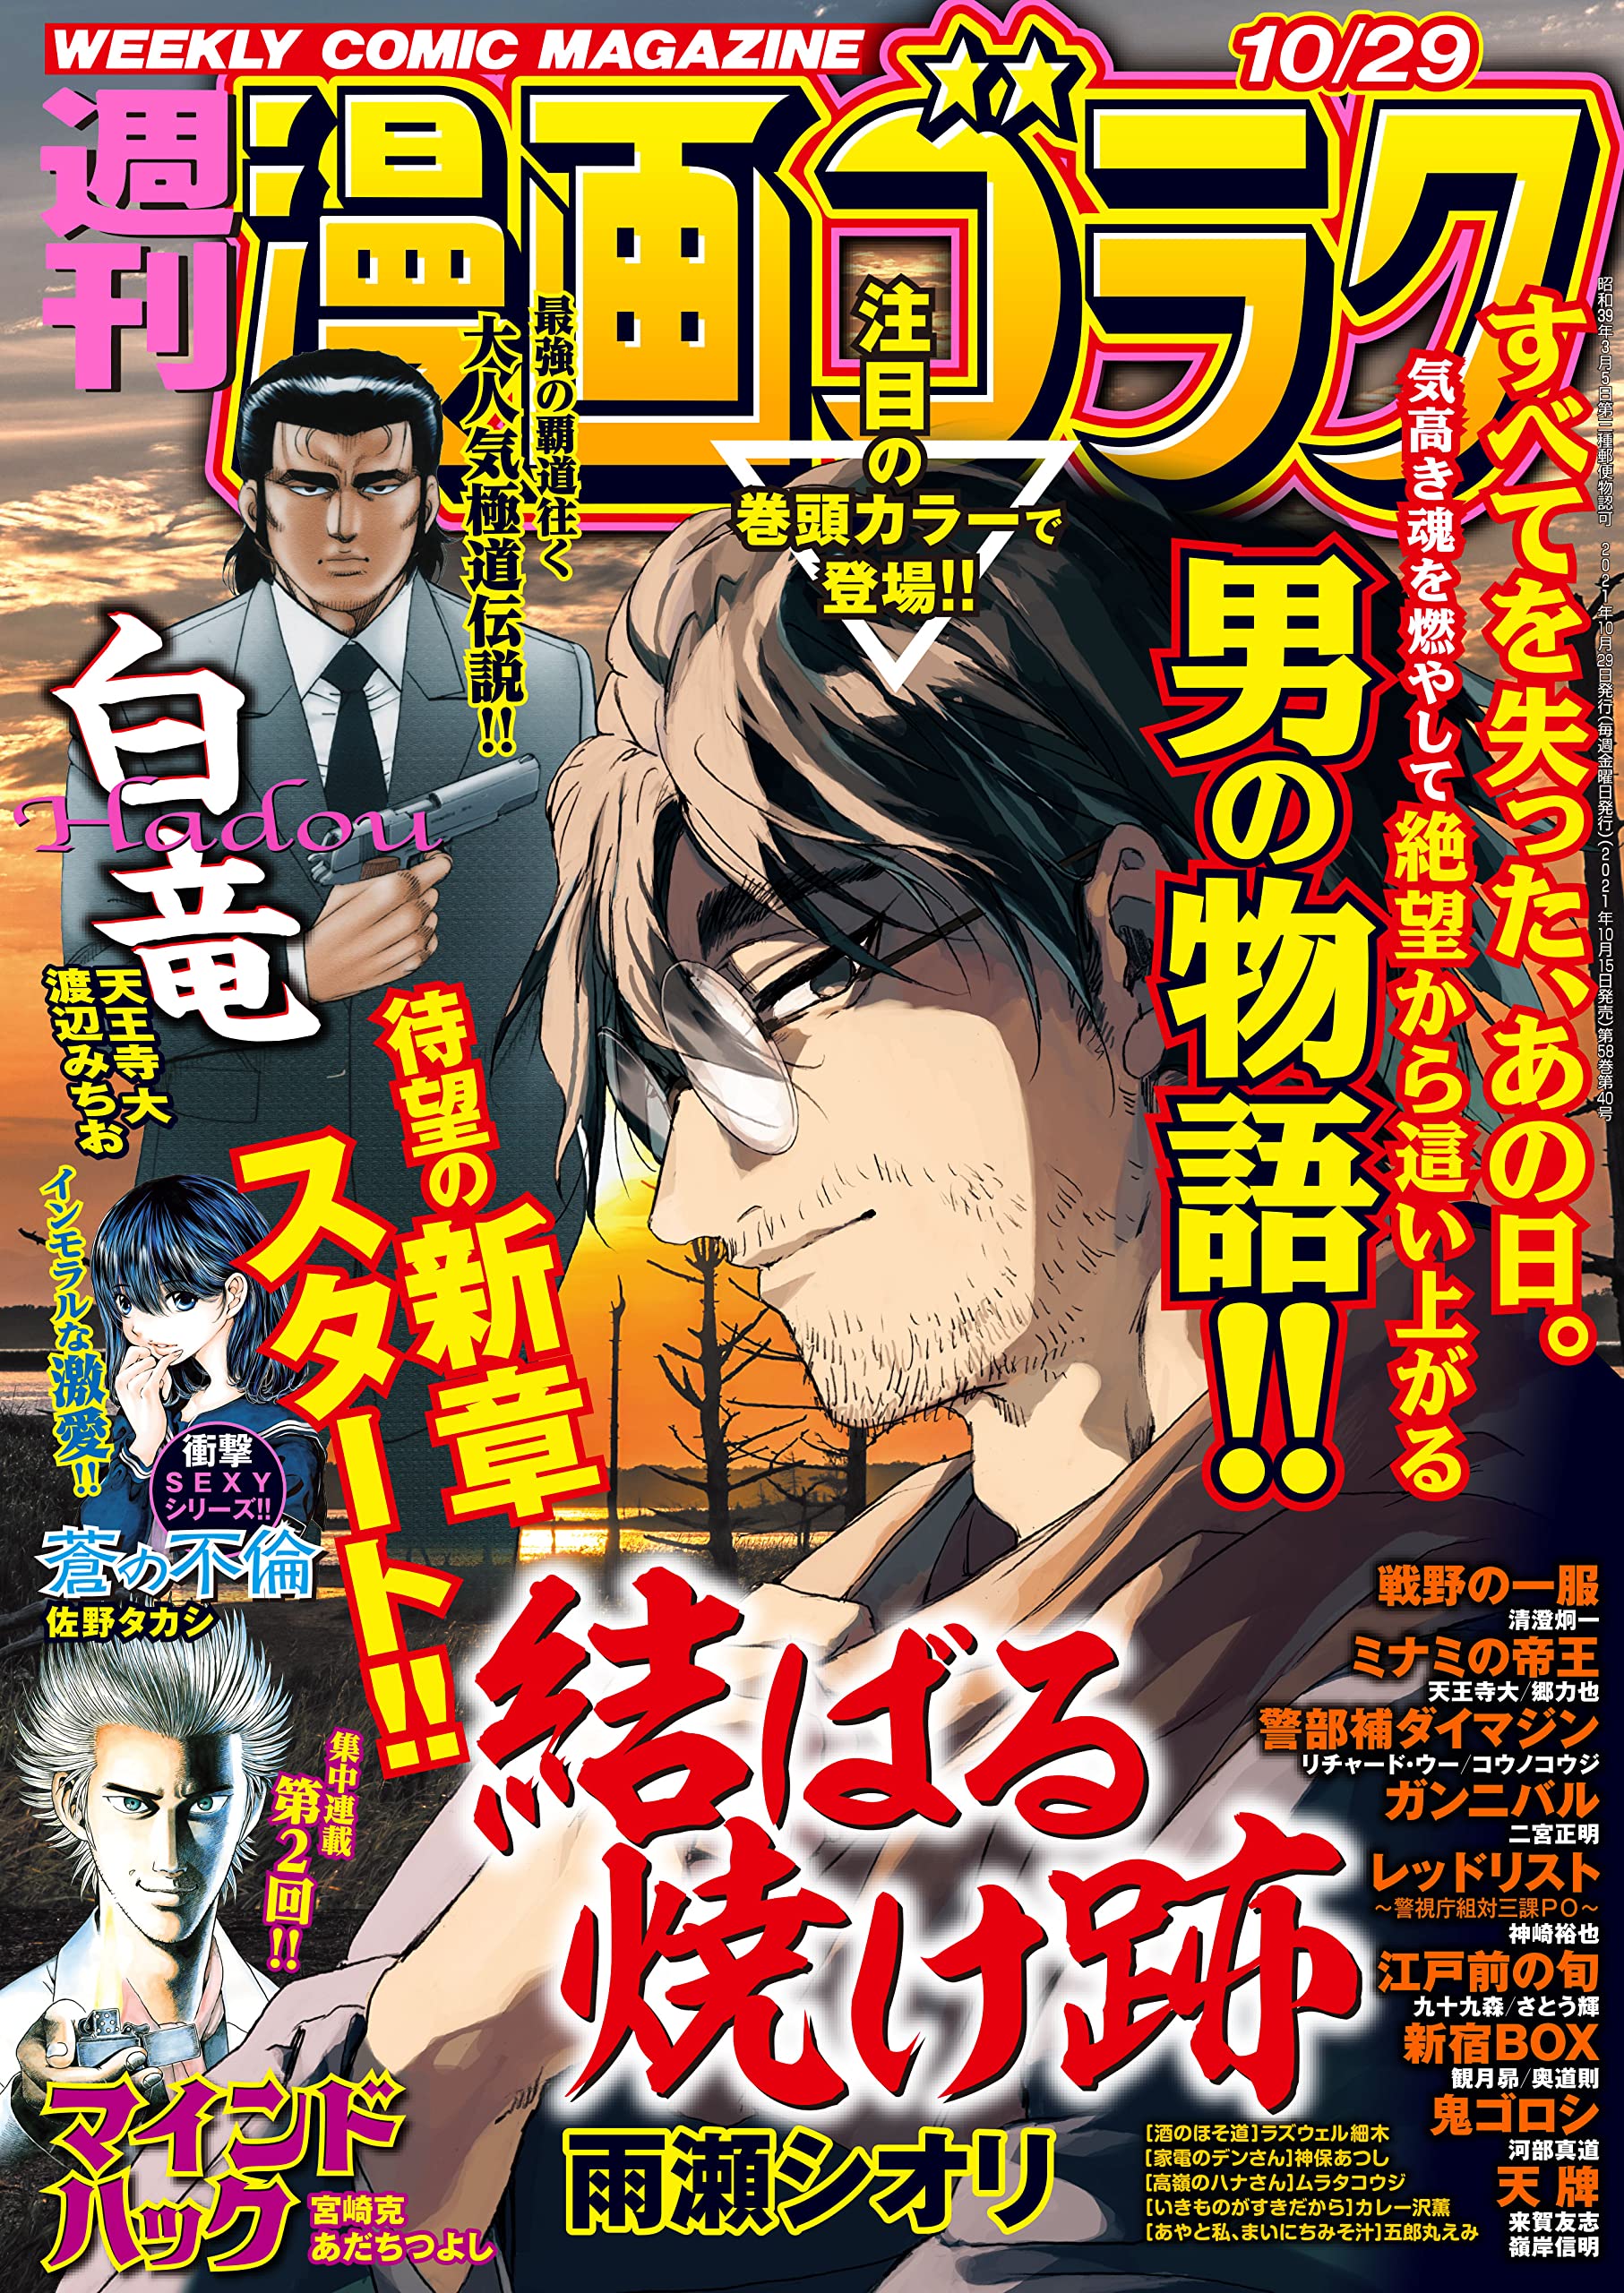 Manga Mogura Re Musumbaru Yakeato By Amase Shiori Is On Cover Of Upcoming Weekly Manga Goraku Issue 10 29 21 T Co watr4ziw Twitter